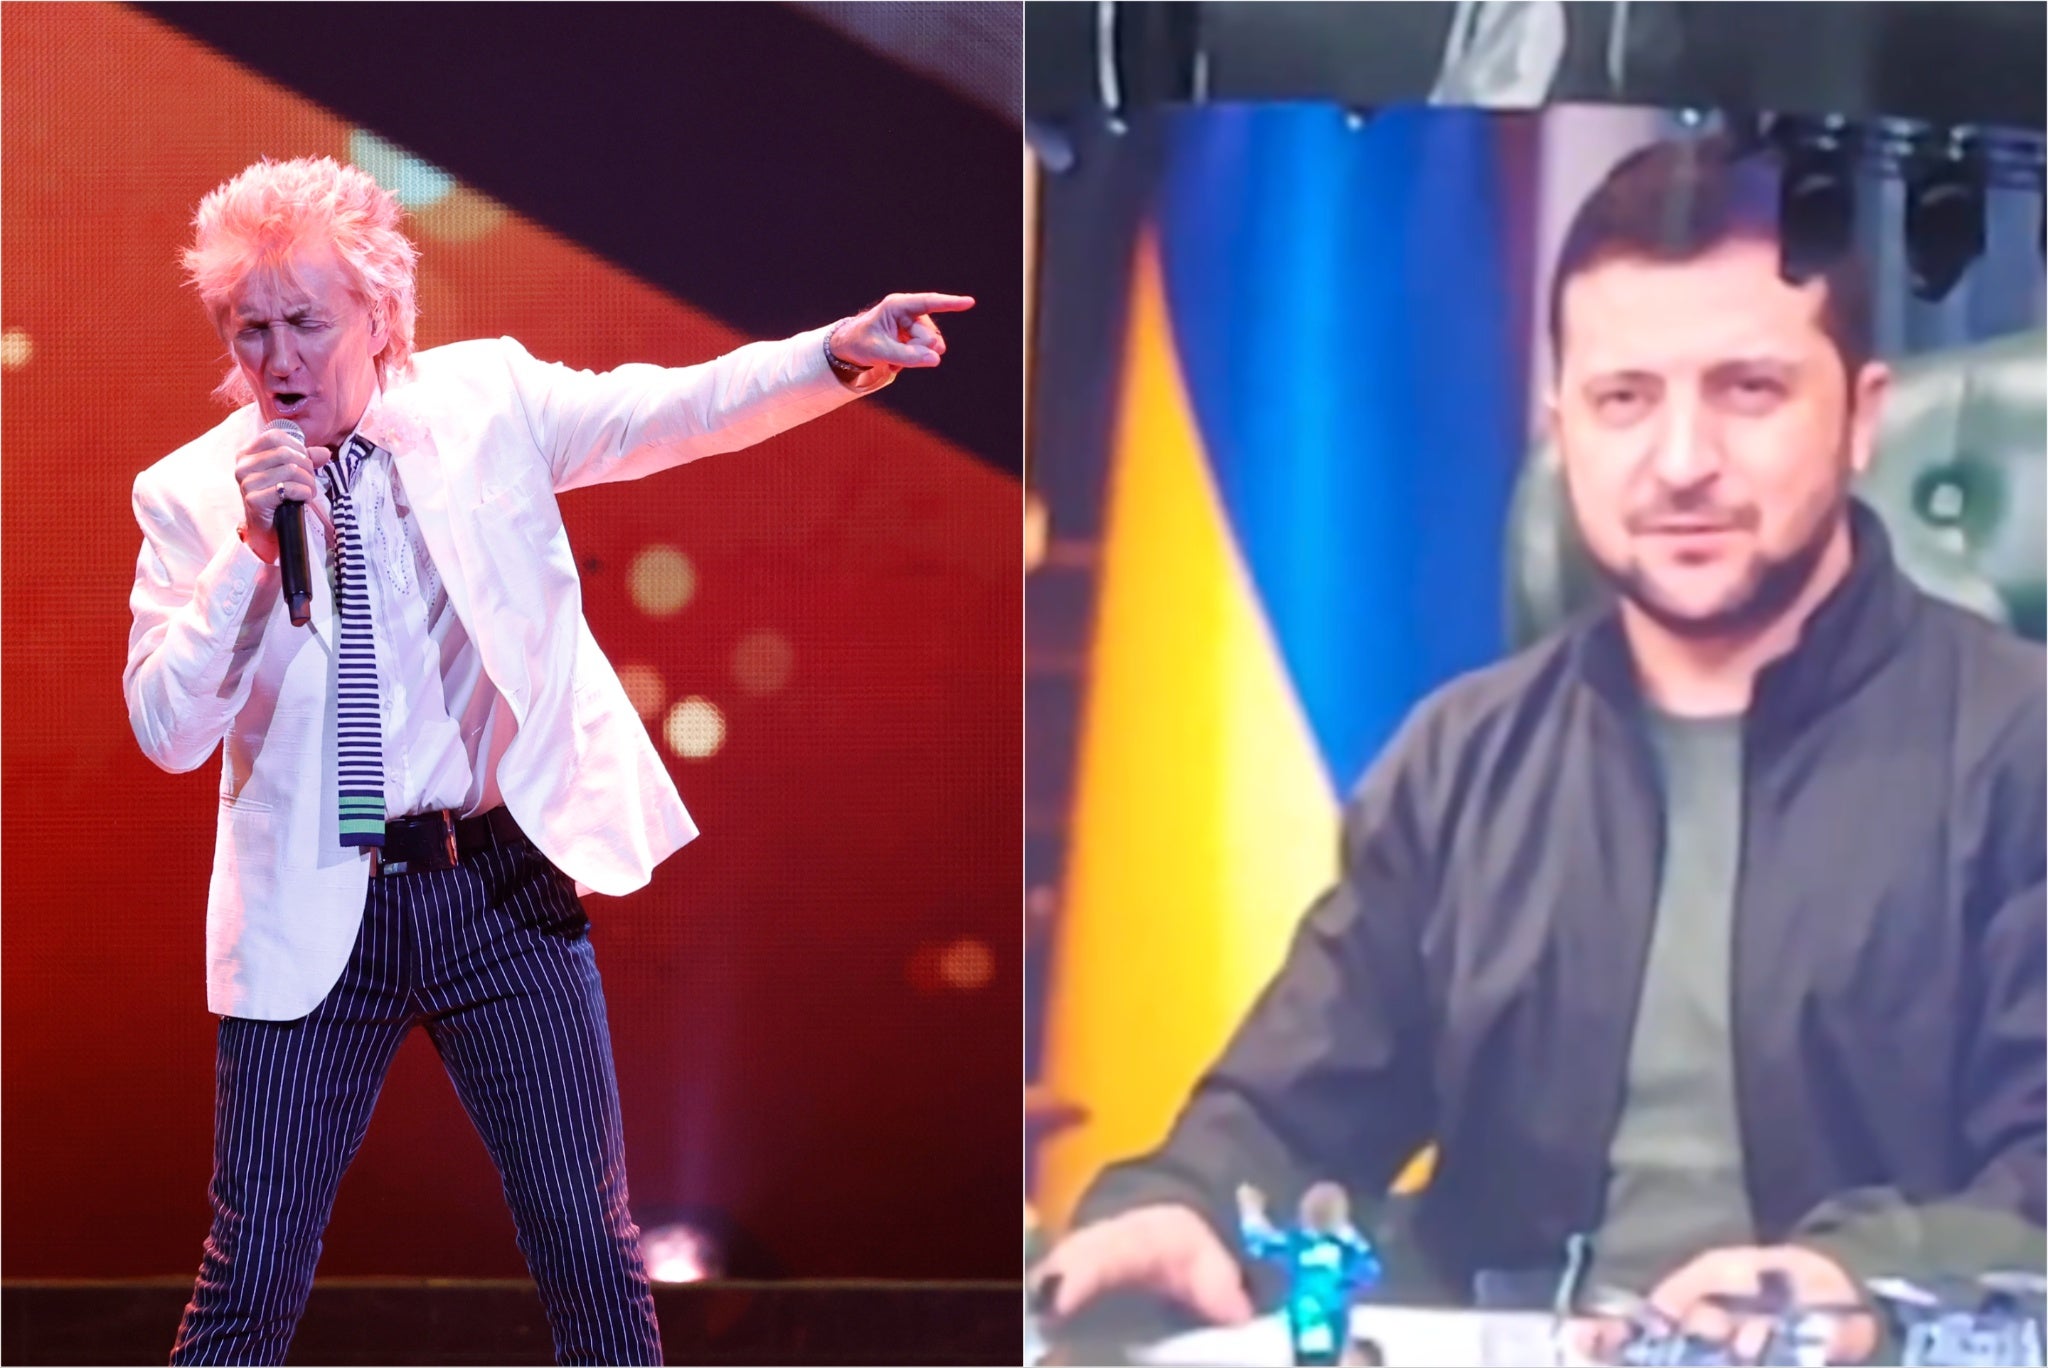 rod stewart, volodymyr zelensky, ukraine, russia, rod stewart ‘booed’ as he salutes ukraine president zelensky during germany concert